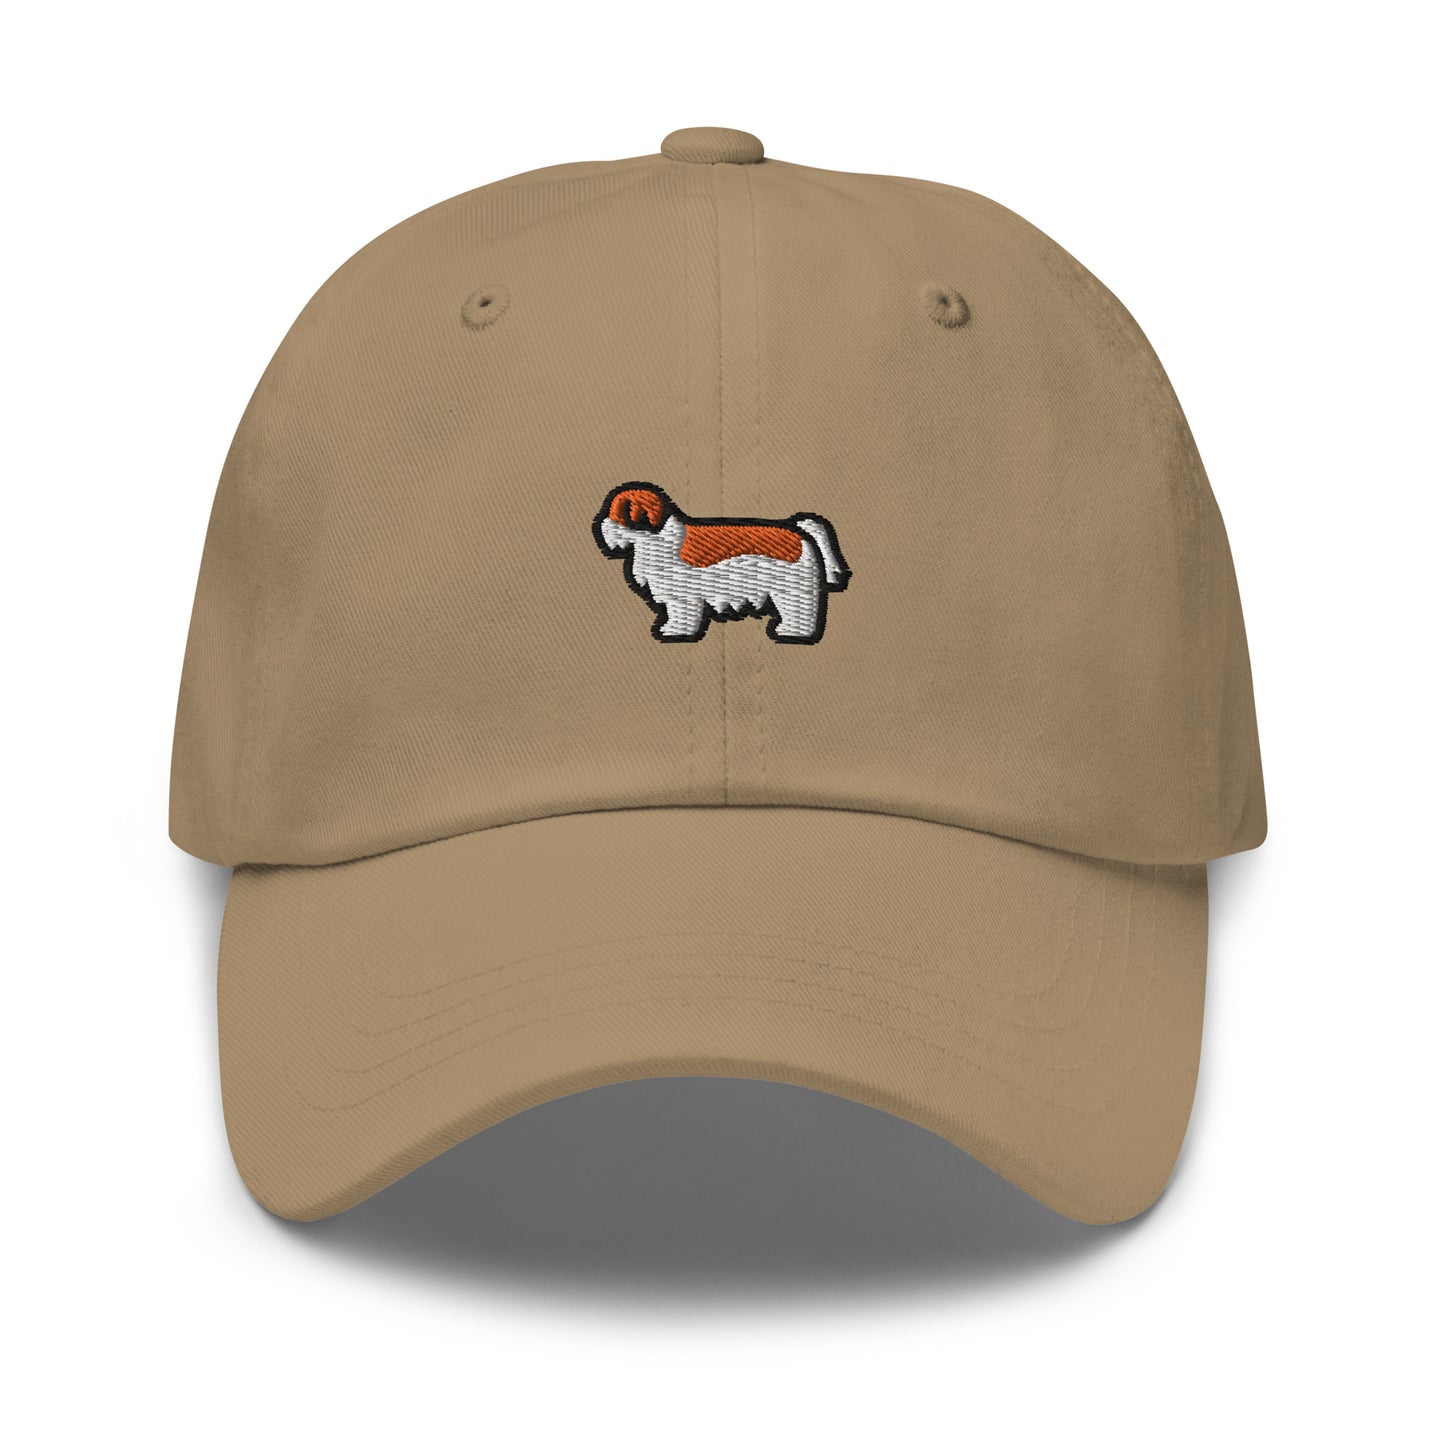 Shih Tzu Dog Embroidered Baseball Cap